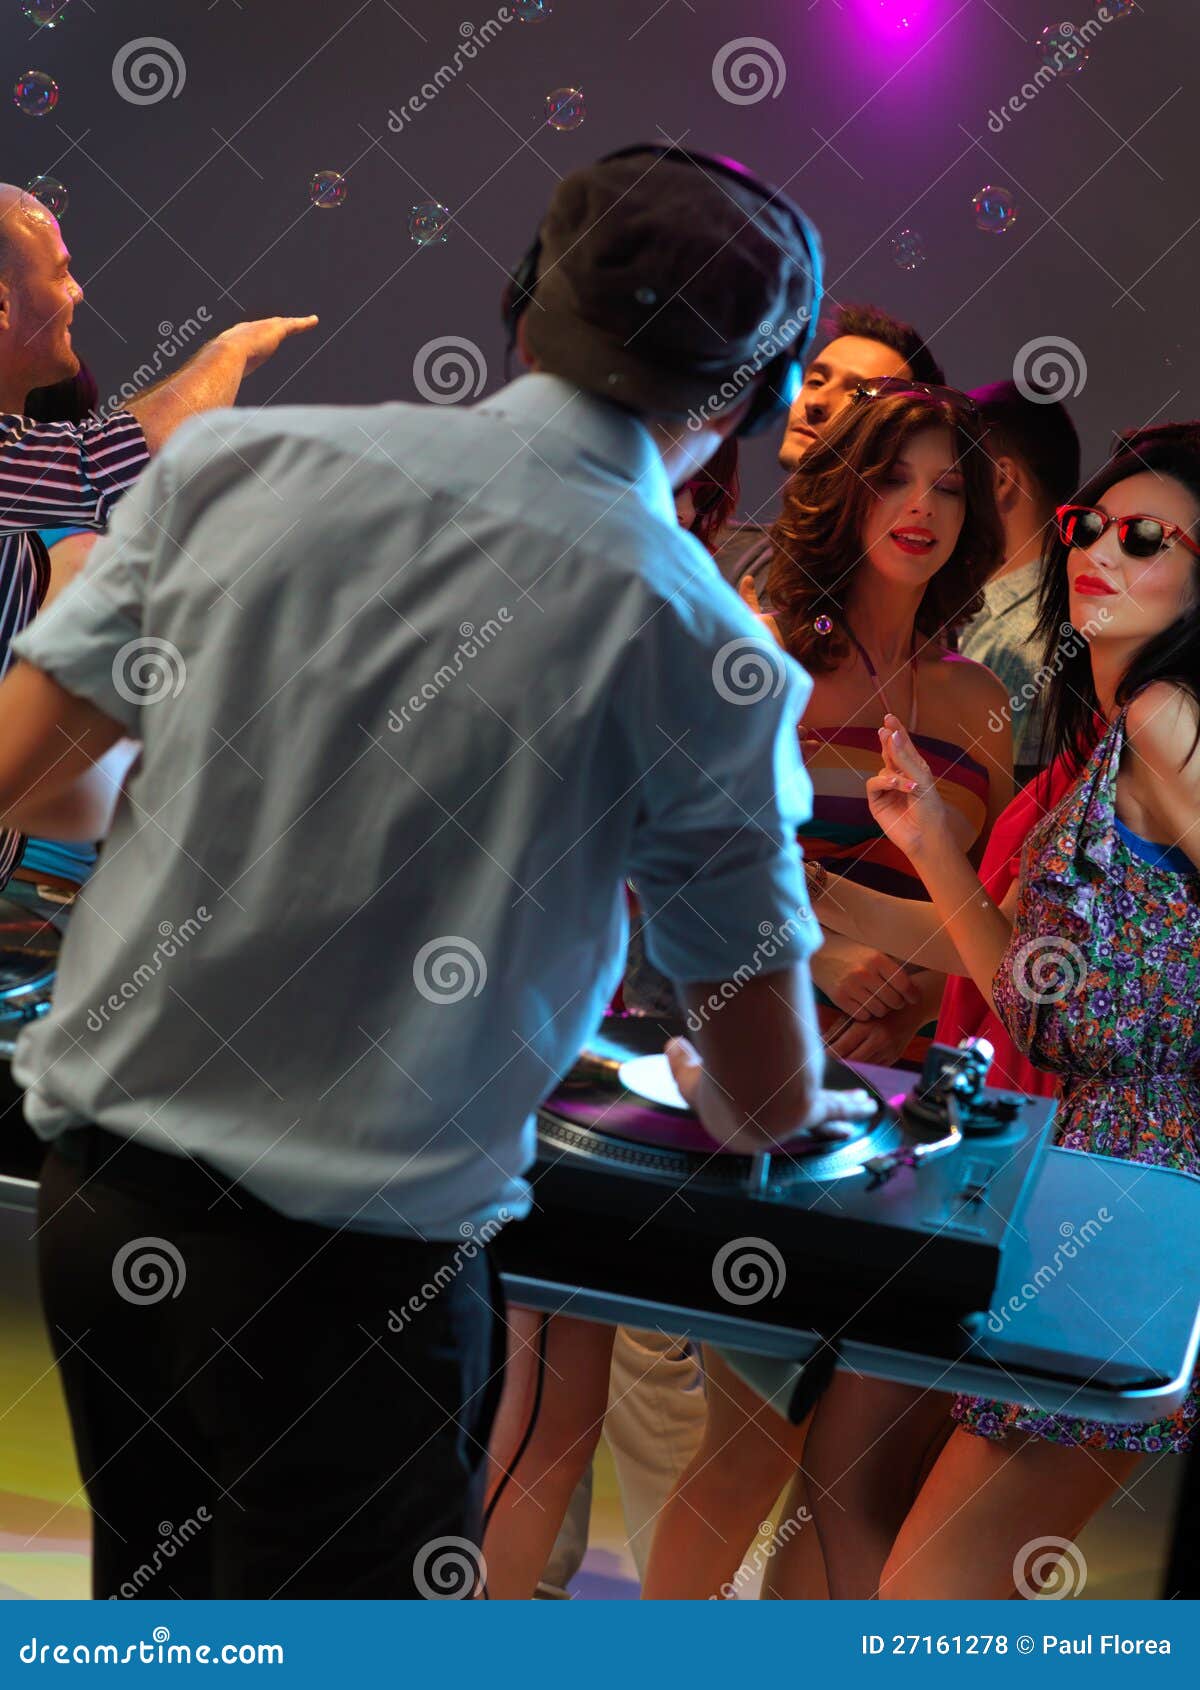 Women Flirting with Dj in Night Club Stock Photo - Image of blue, crowd ...